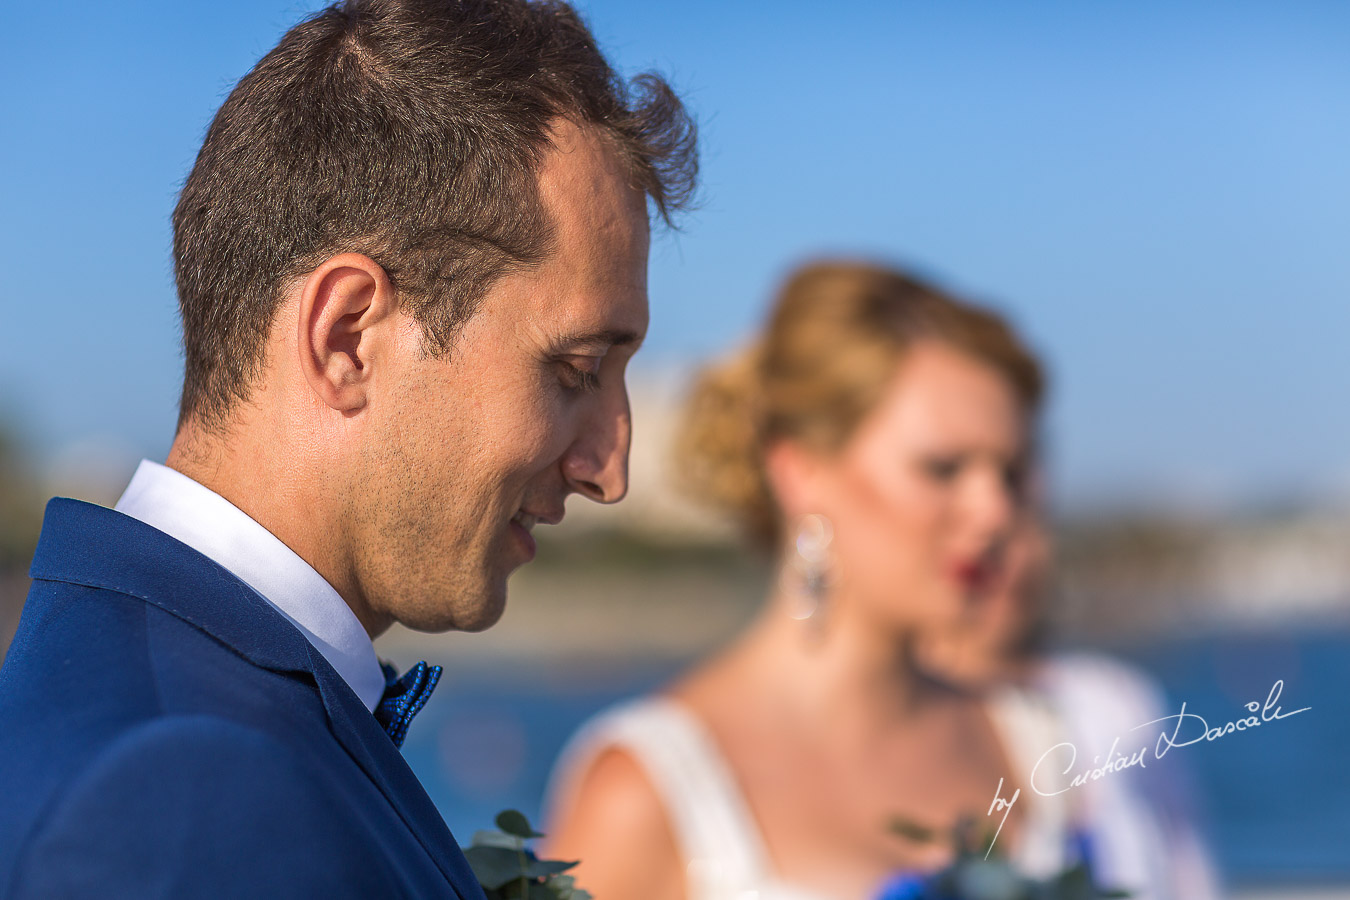 Emotional Wedding moment captured at Elias Beach Hotel in Limassol by Cristian Dascalu